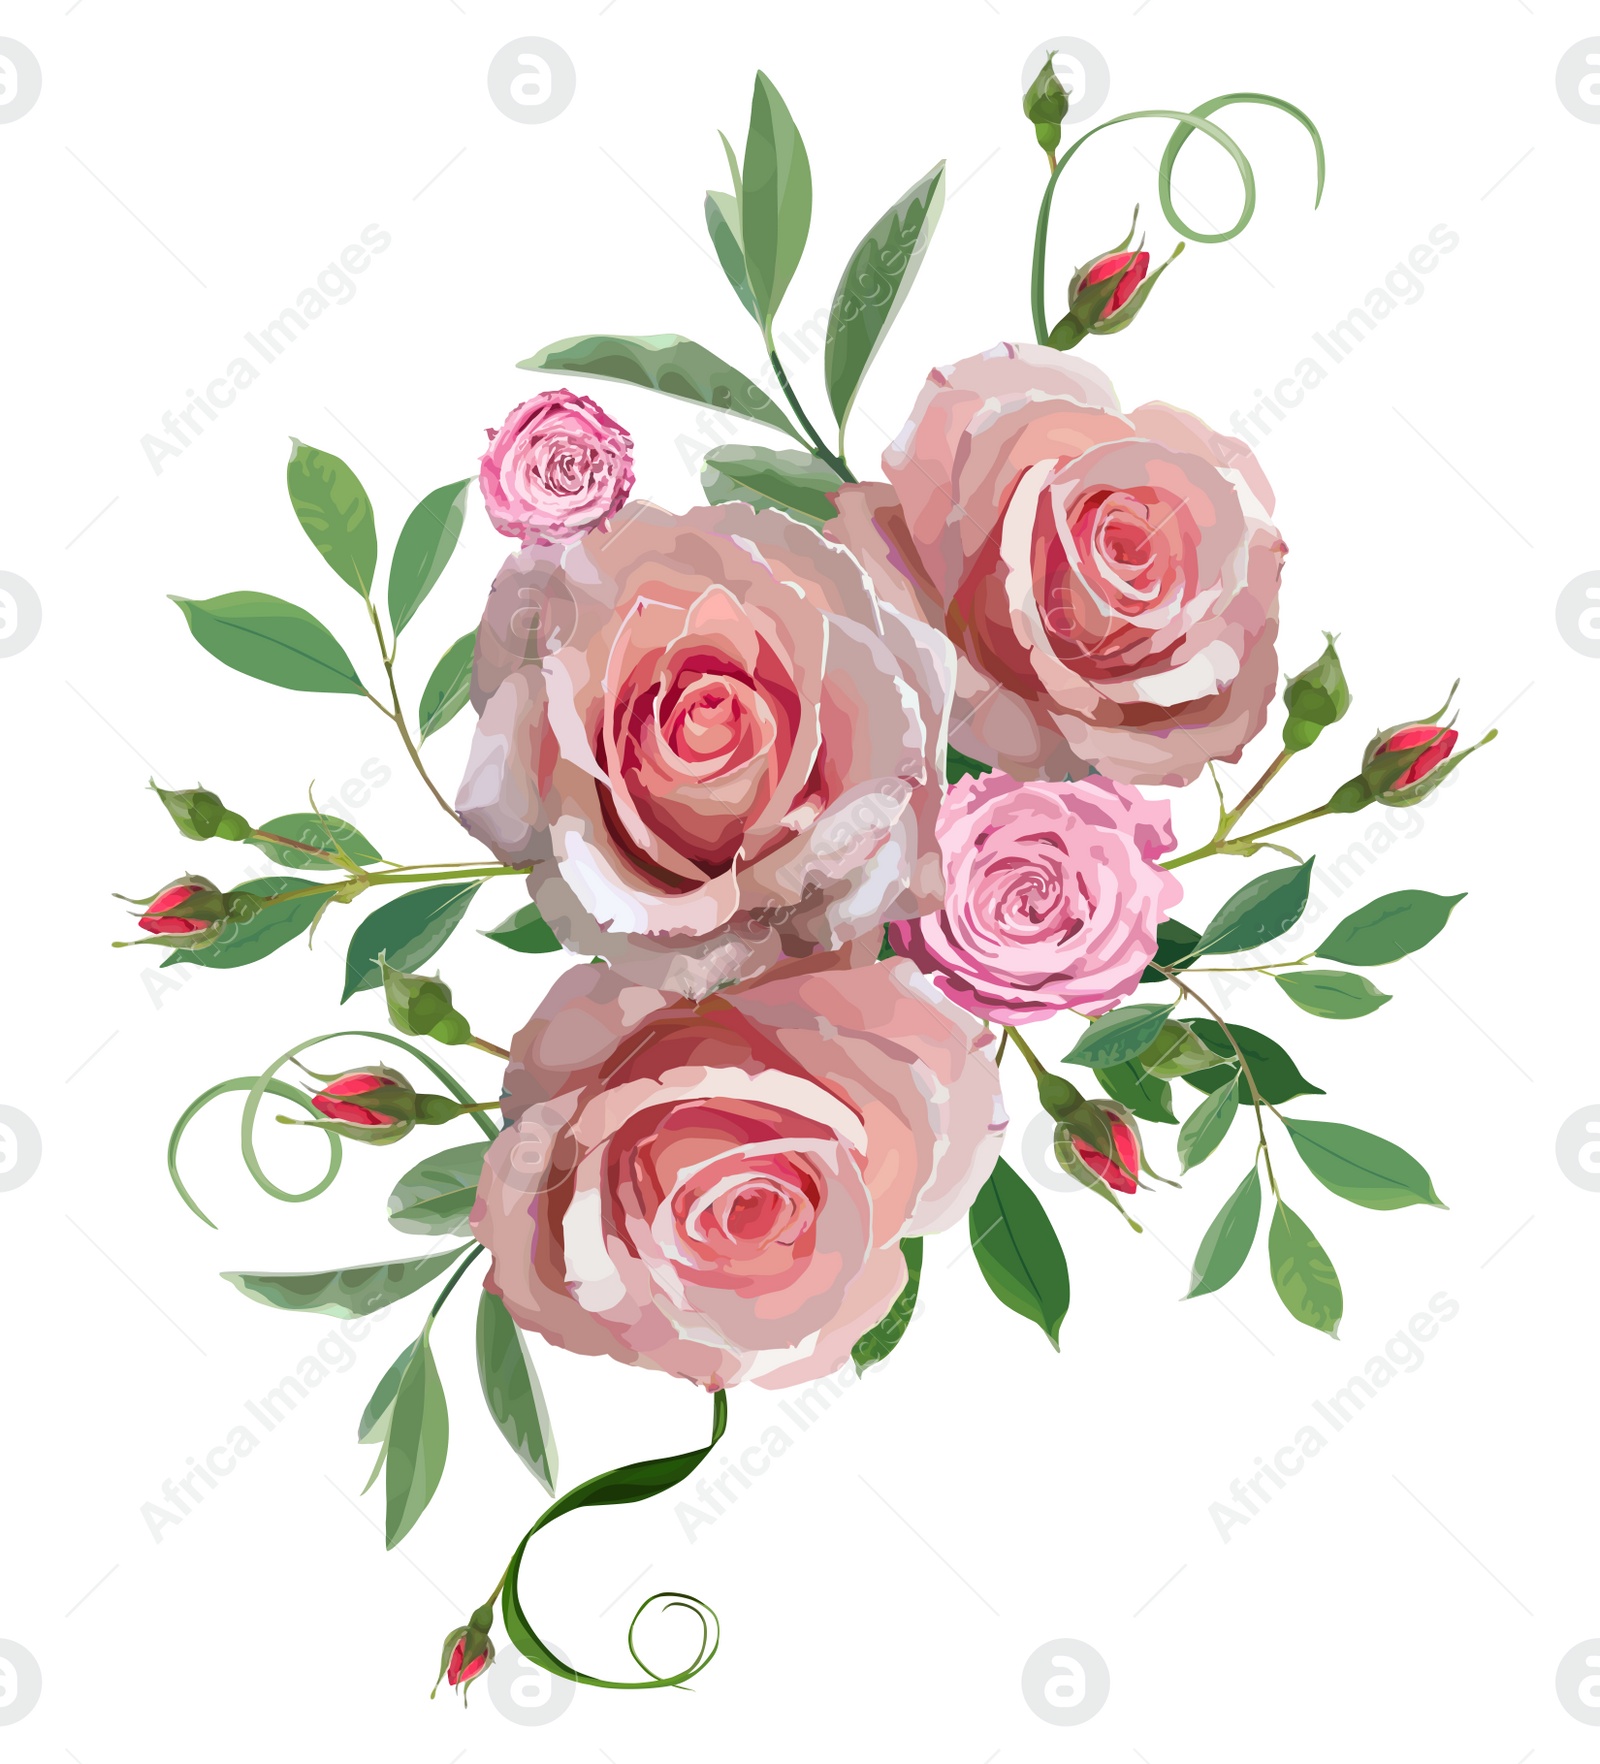 Illustration of Beautiful roses with green leaves illustration on white background. Stylish design